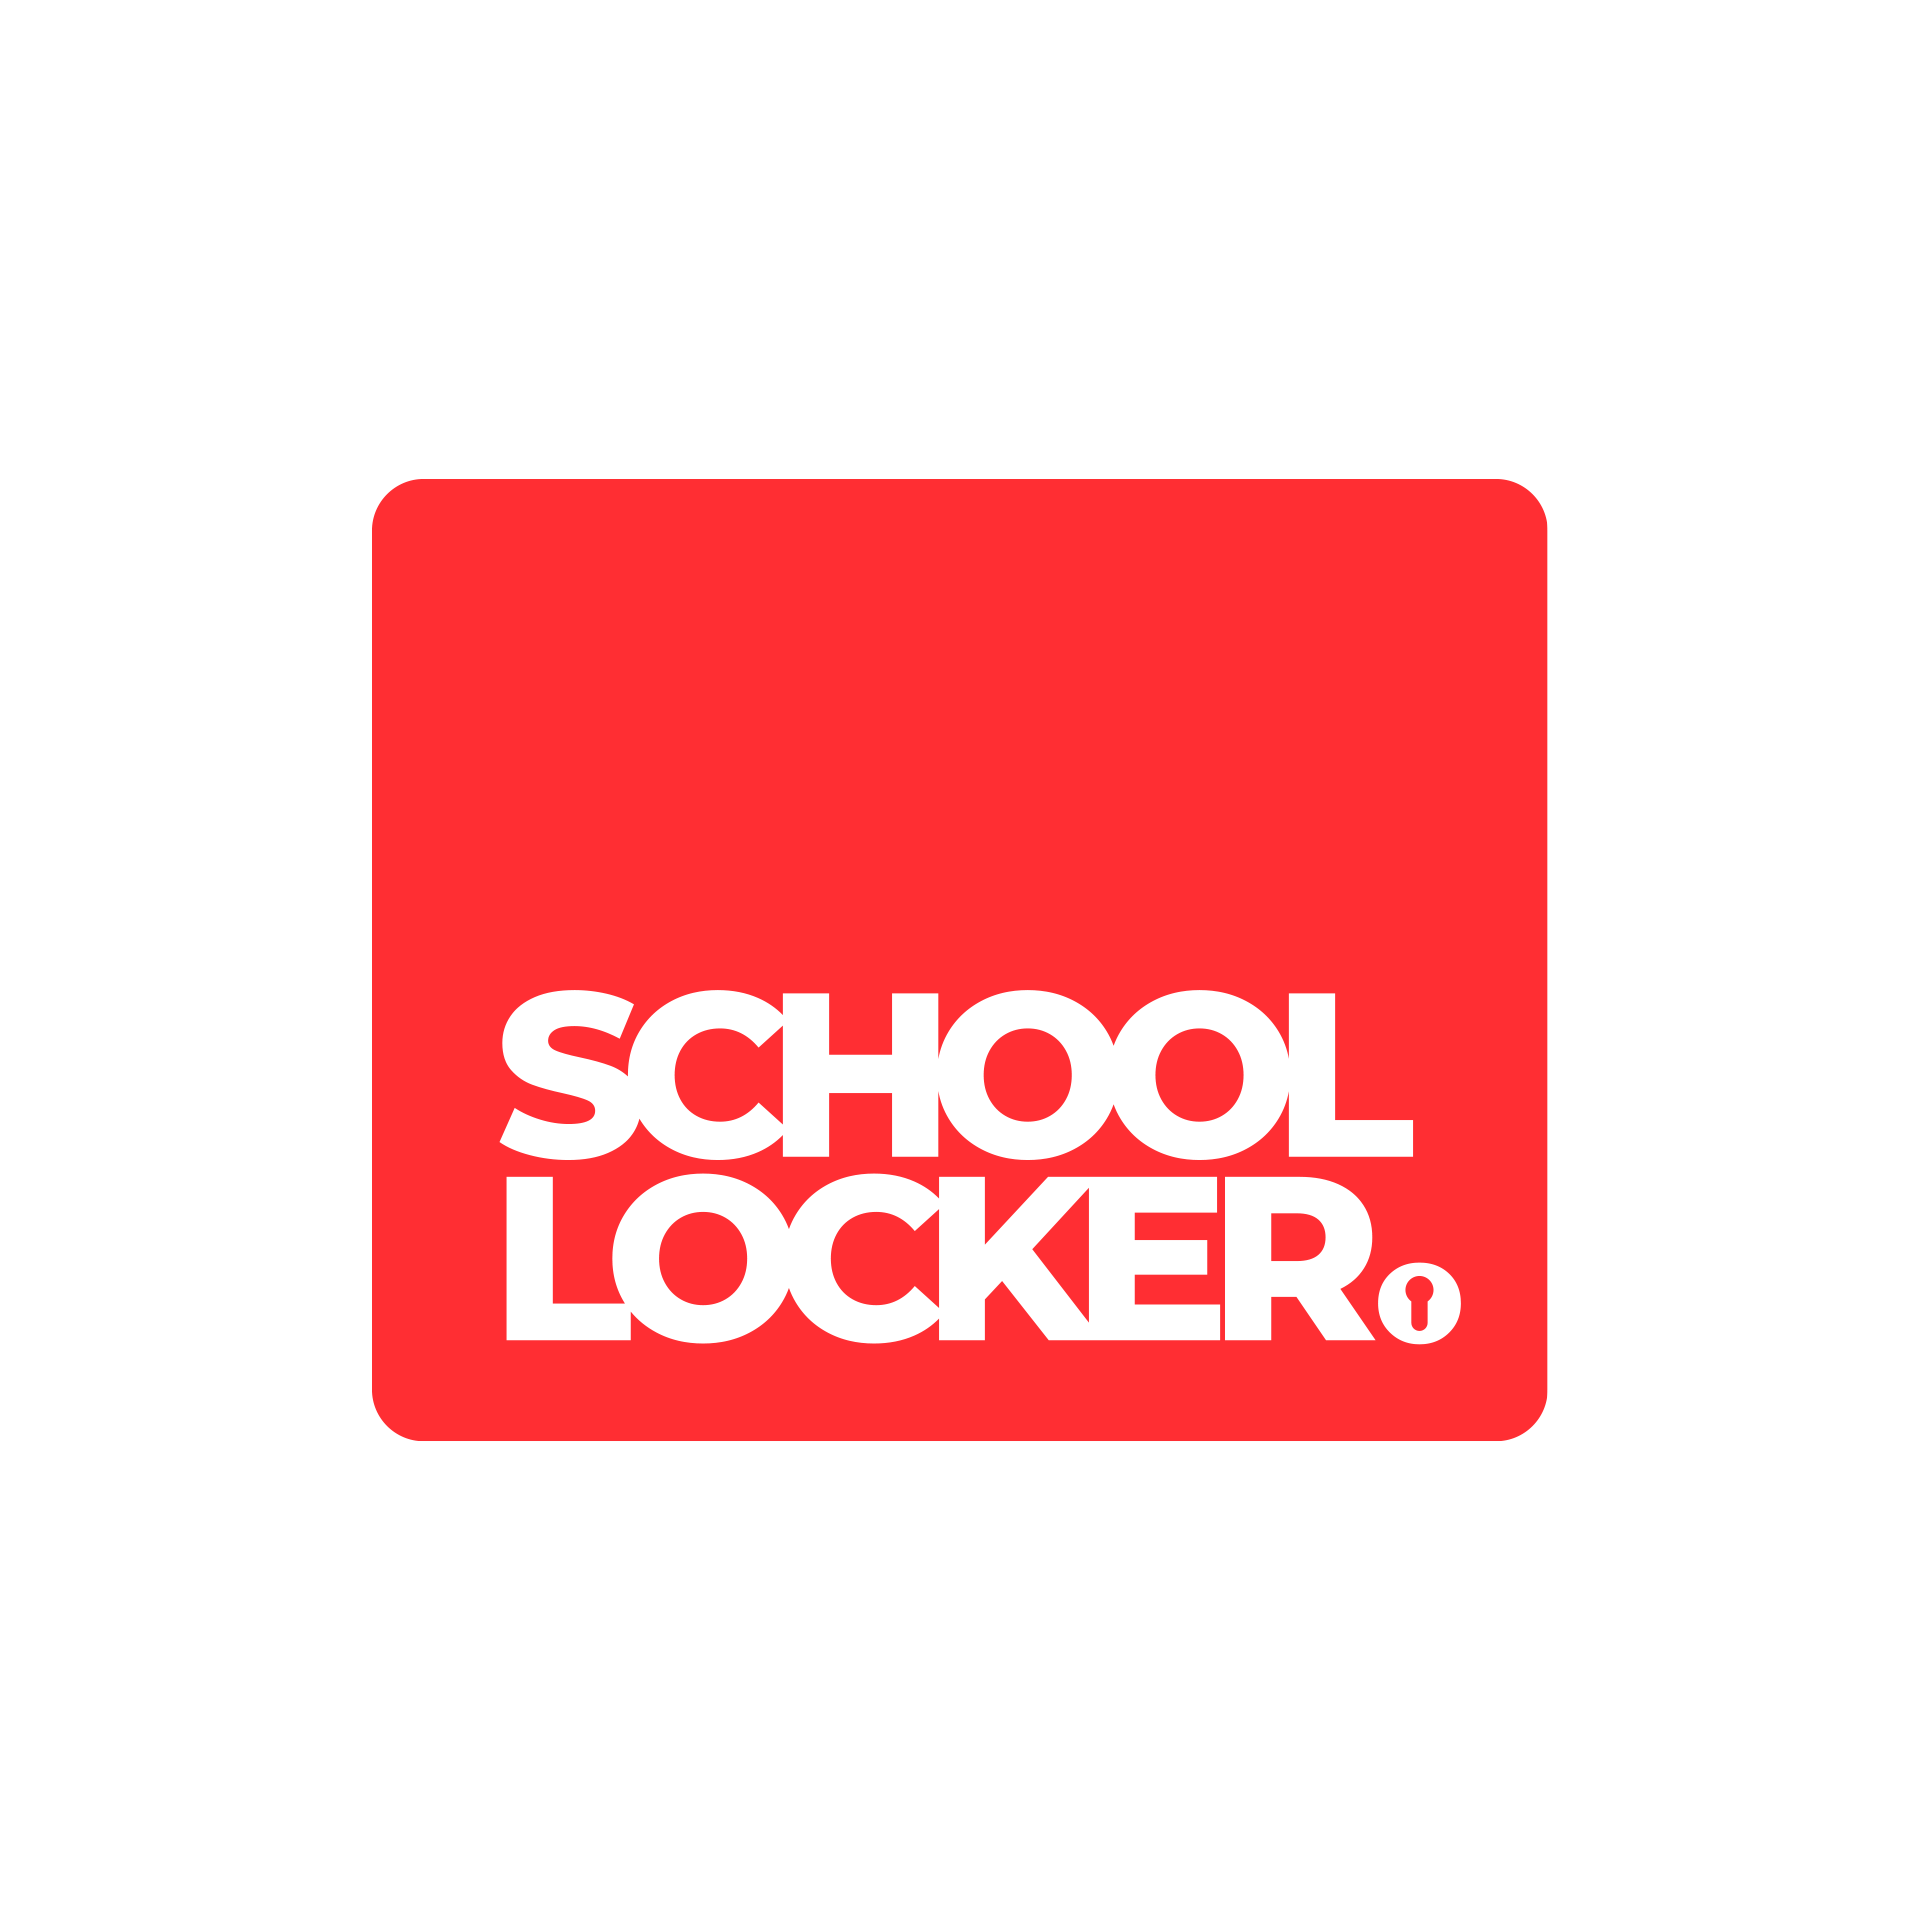 The School locker